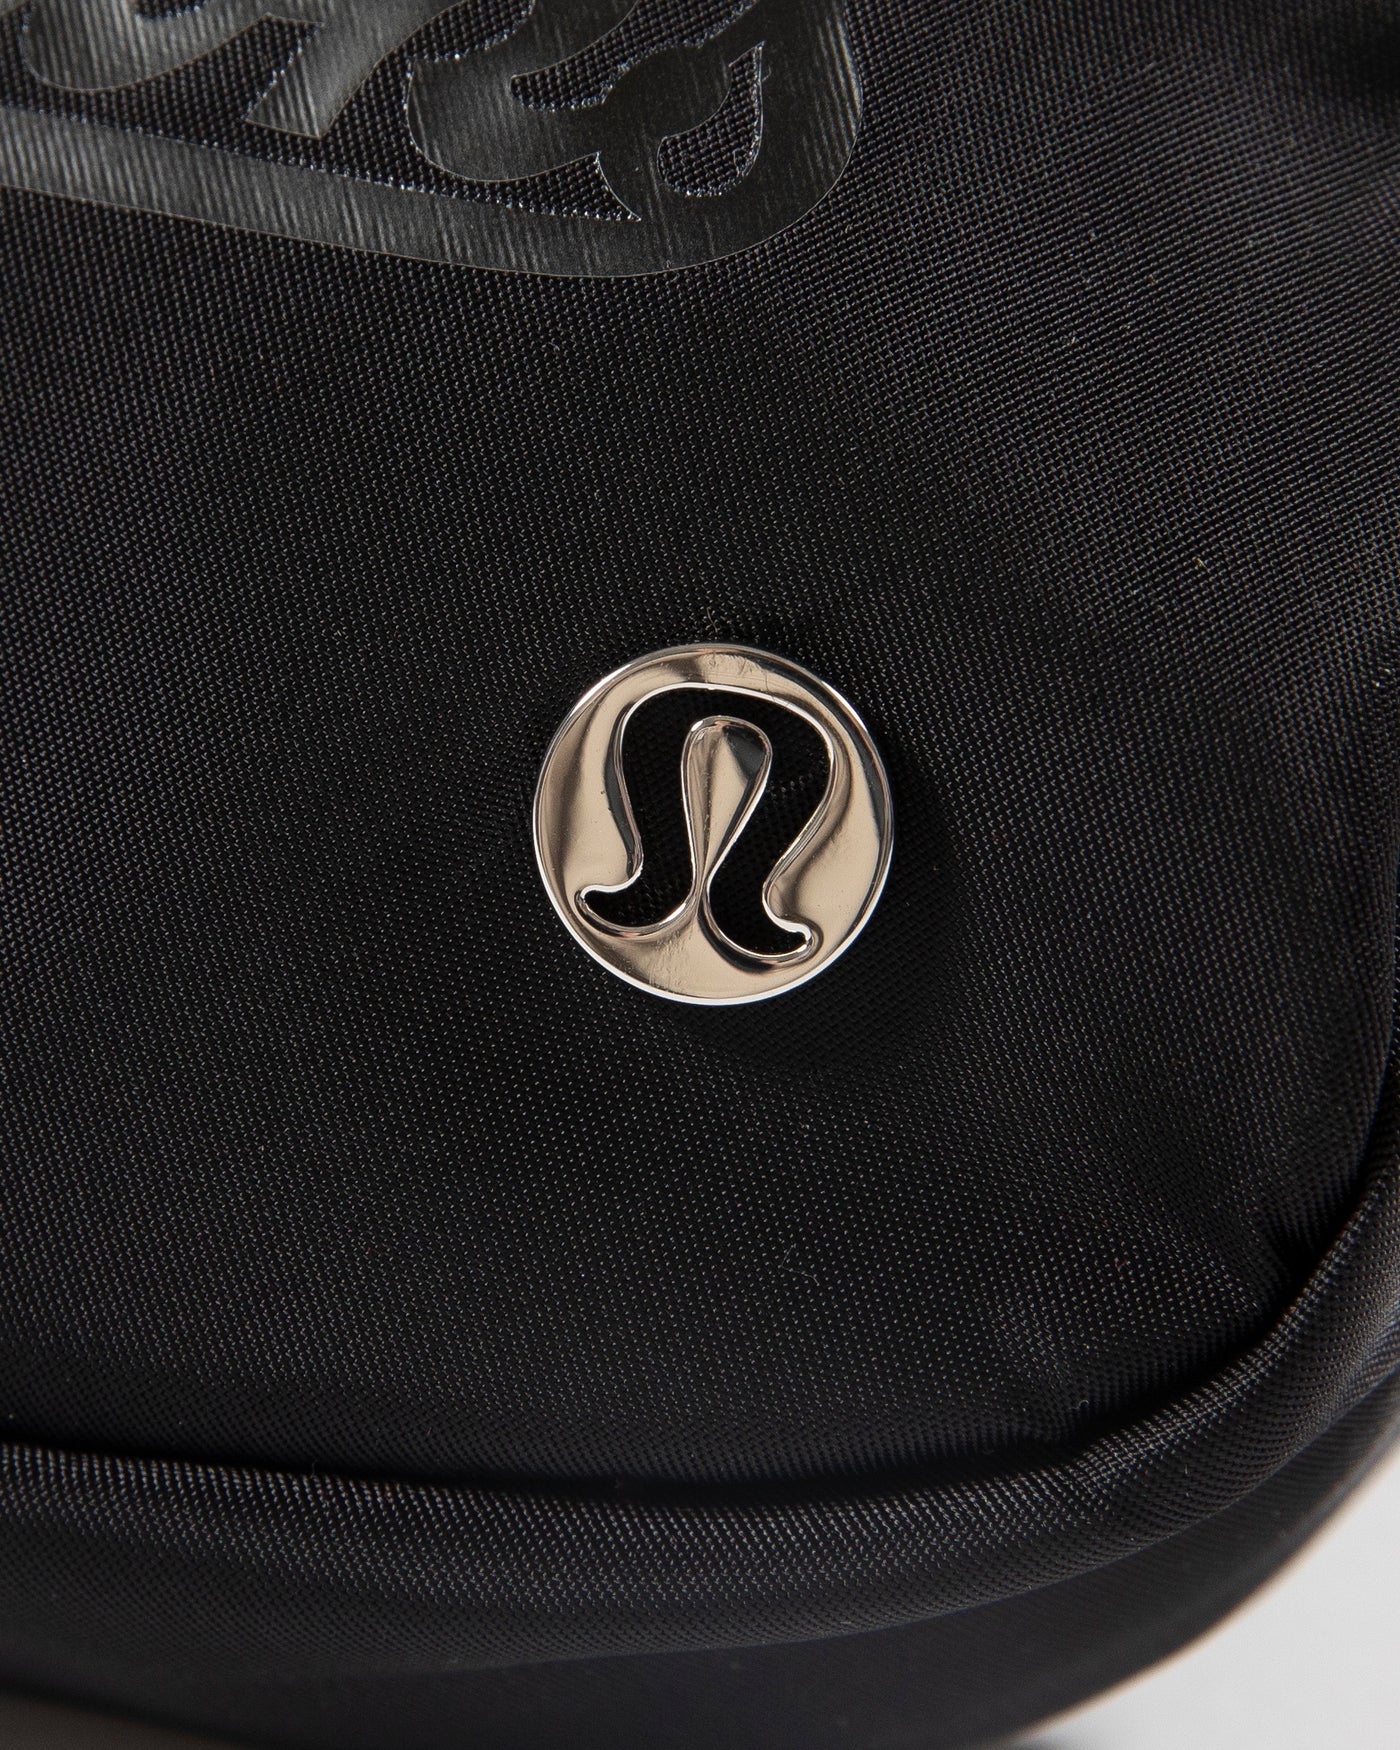 black lululemon Everywhere Belt Bag with Chicago Blackhawks wordmark graphic in black across front - detail lay flat